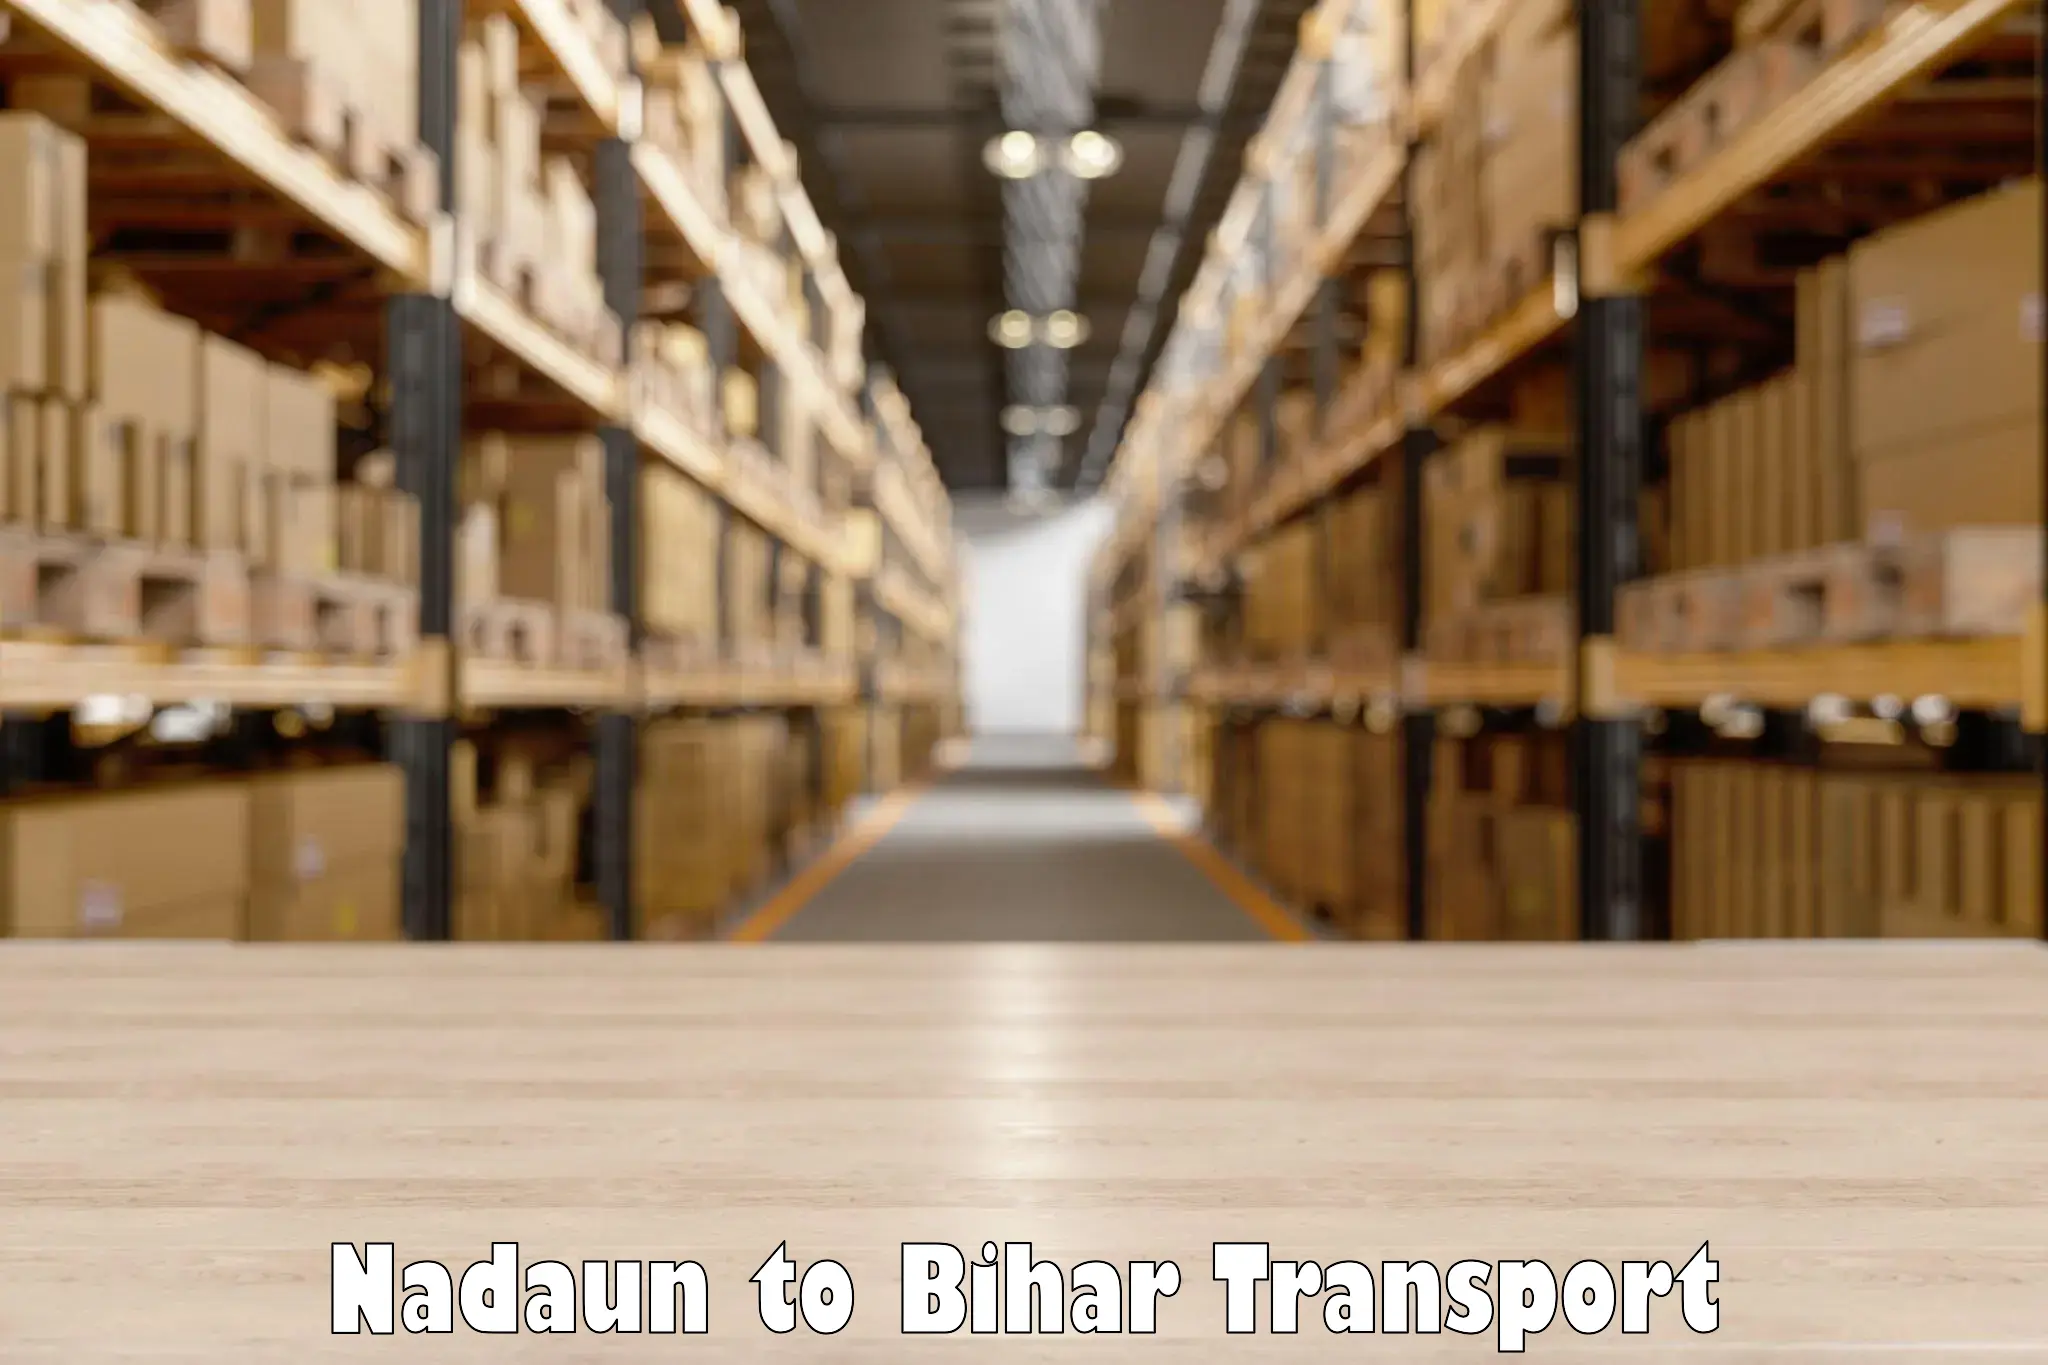 Nearby transport service Nadaun to Bihar